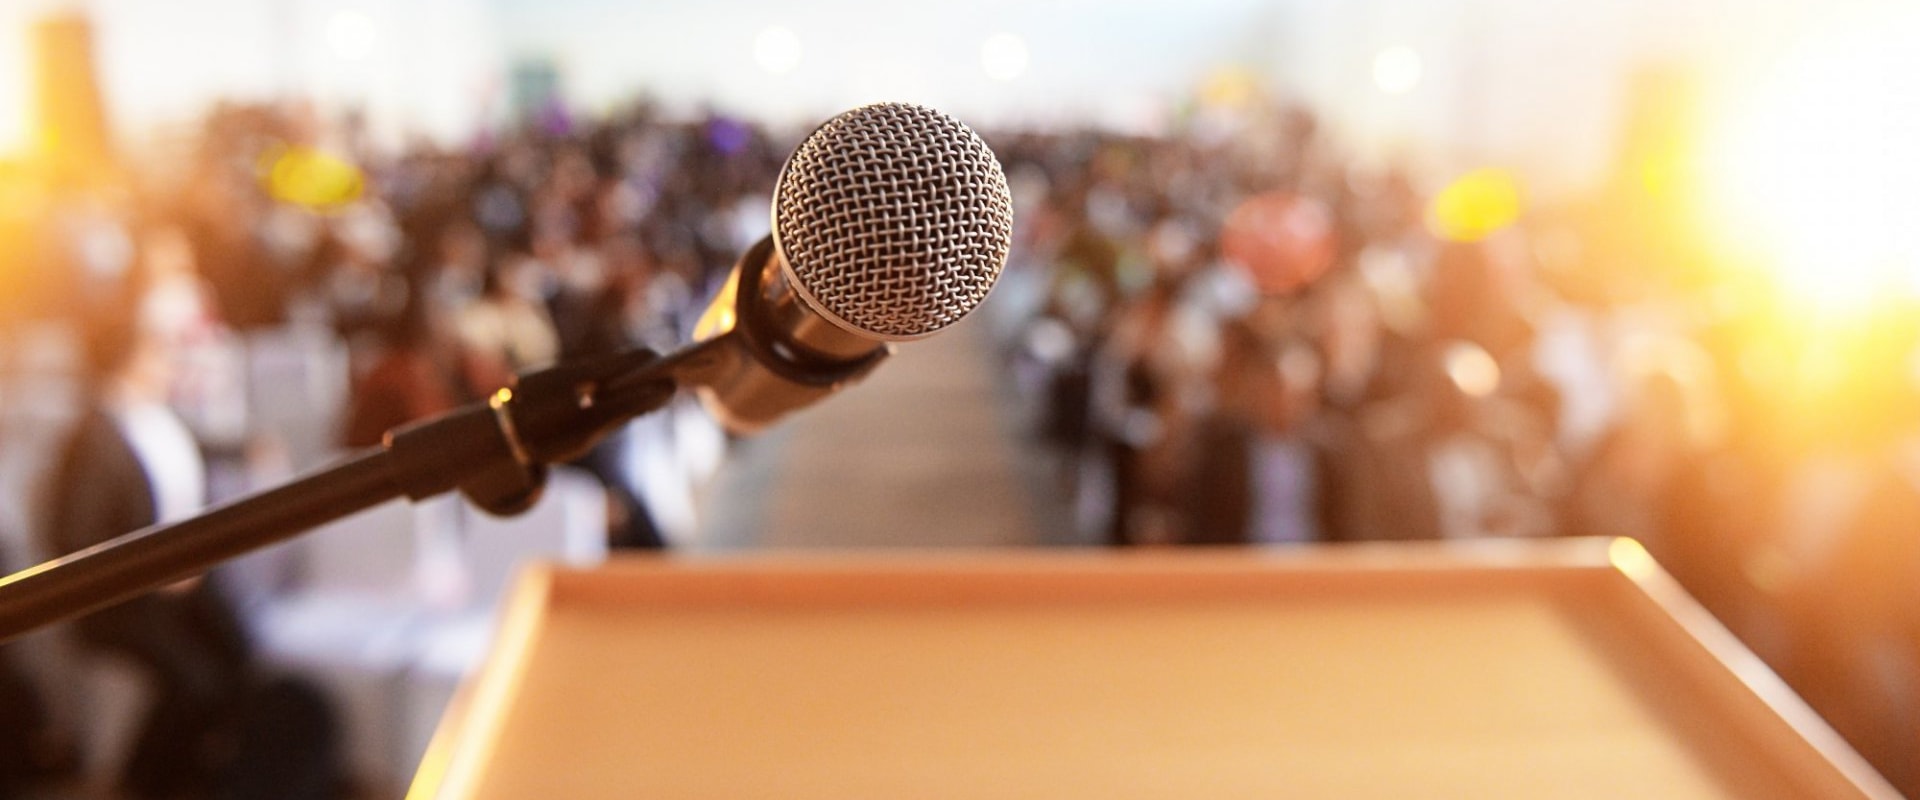 Is motivational speaker a good career?